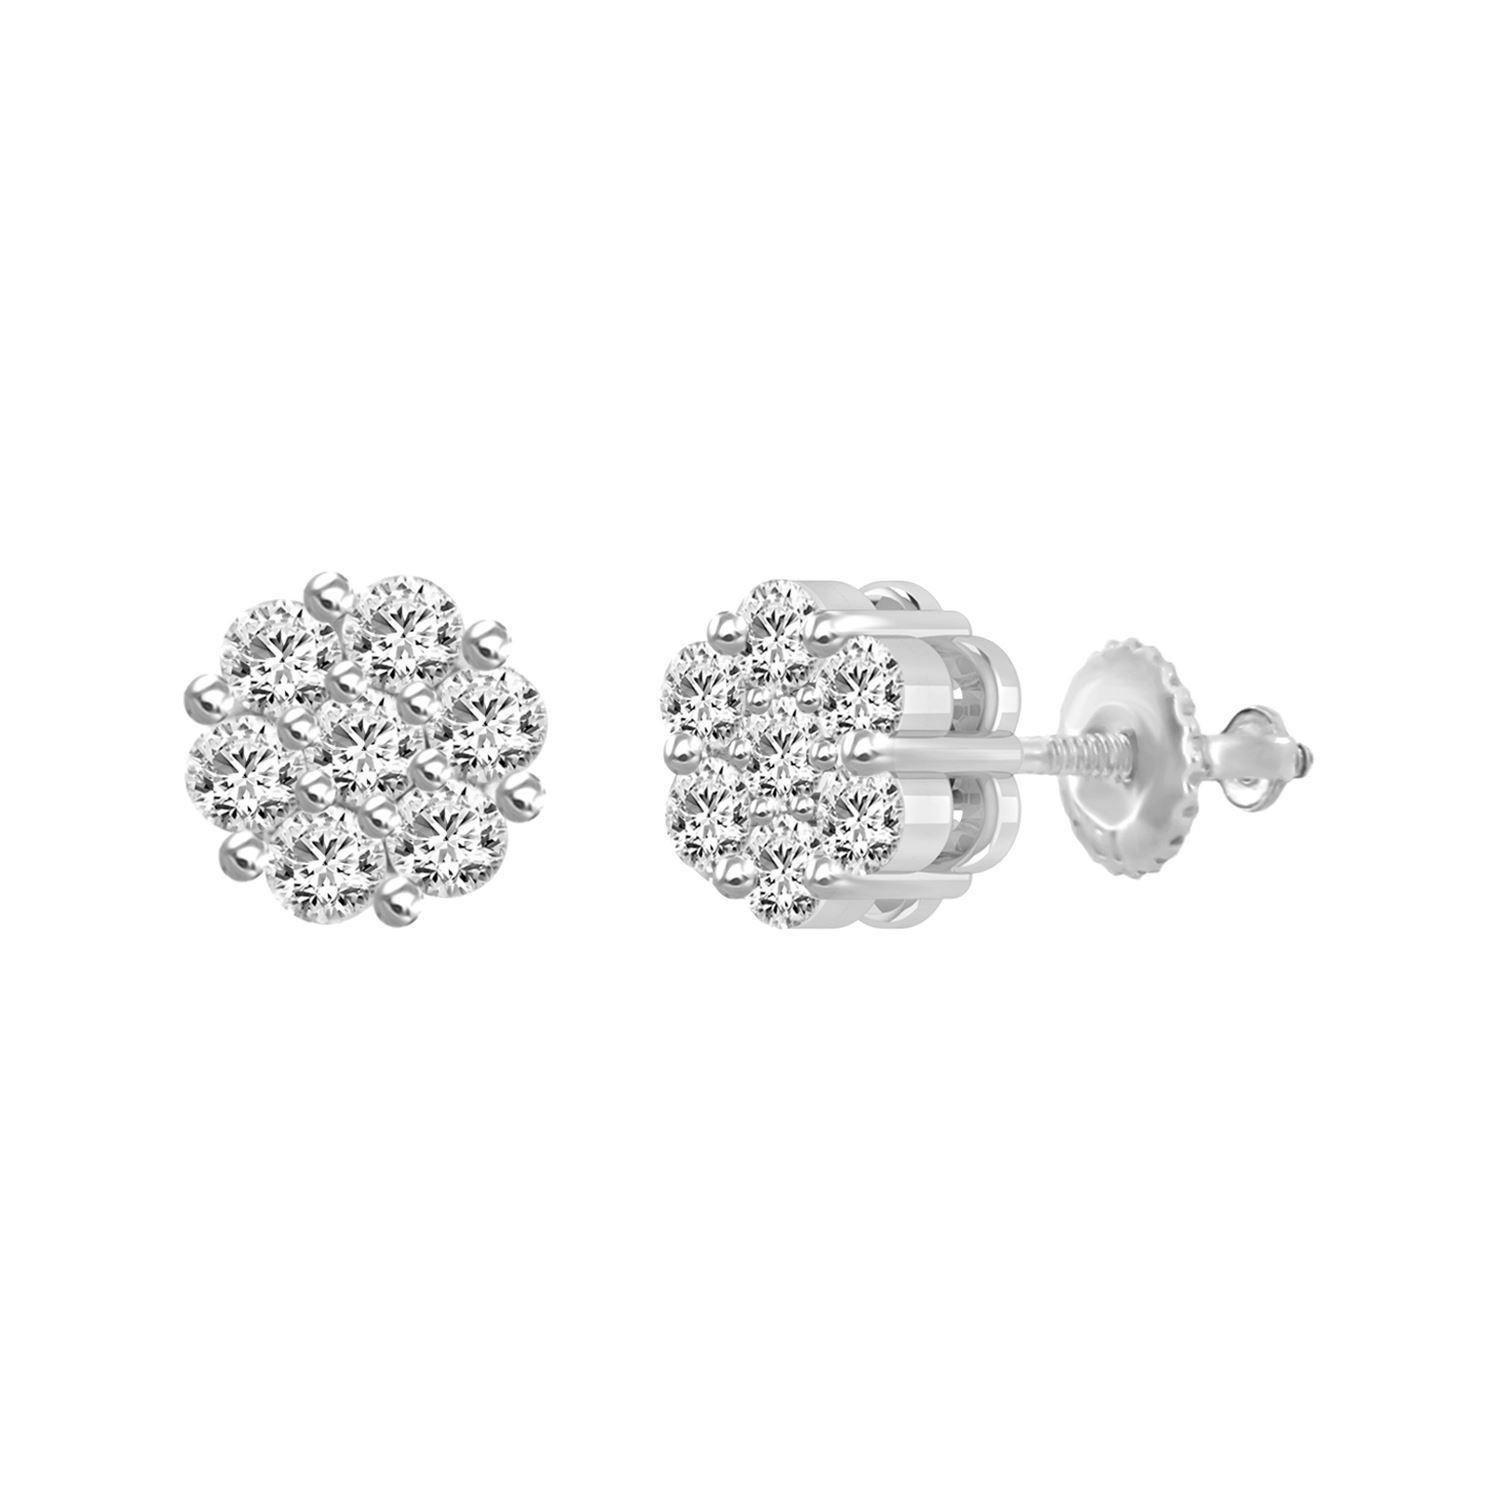 0020343_ladies-earring-13-ct-round-diamond-14k-white-gold.jpeg